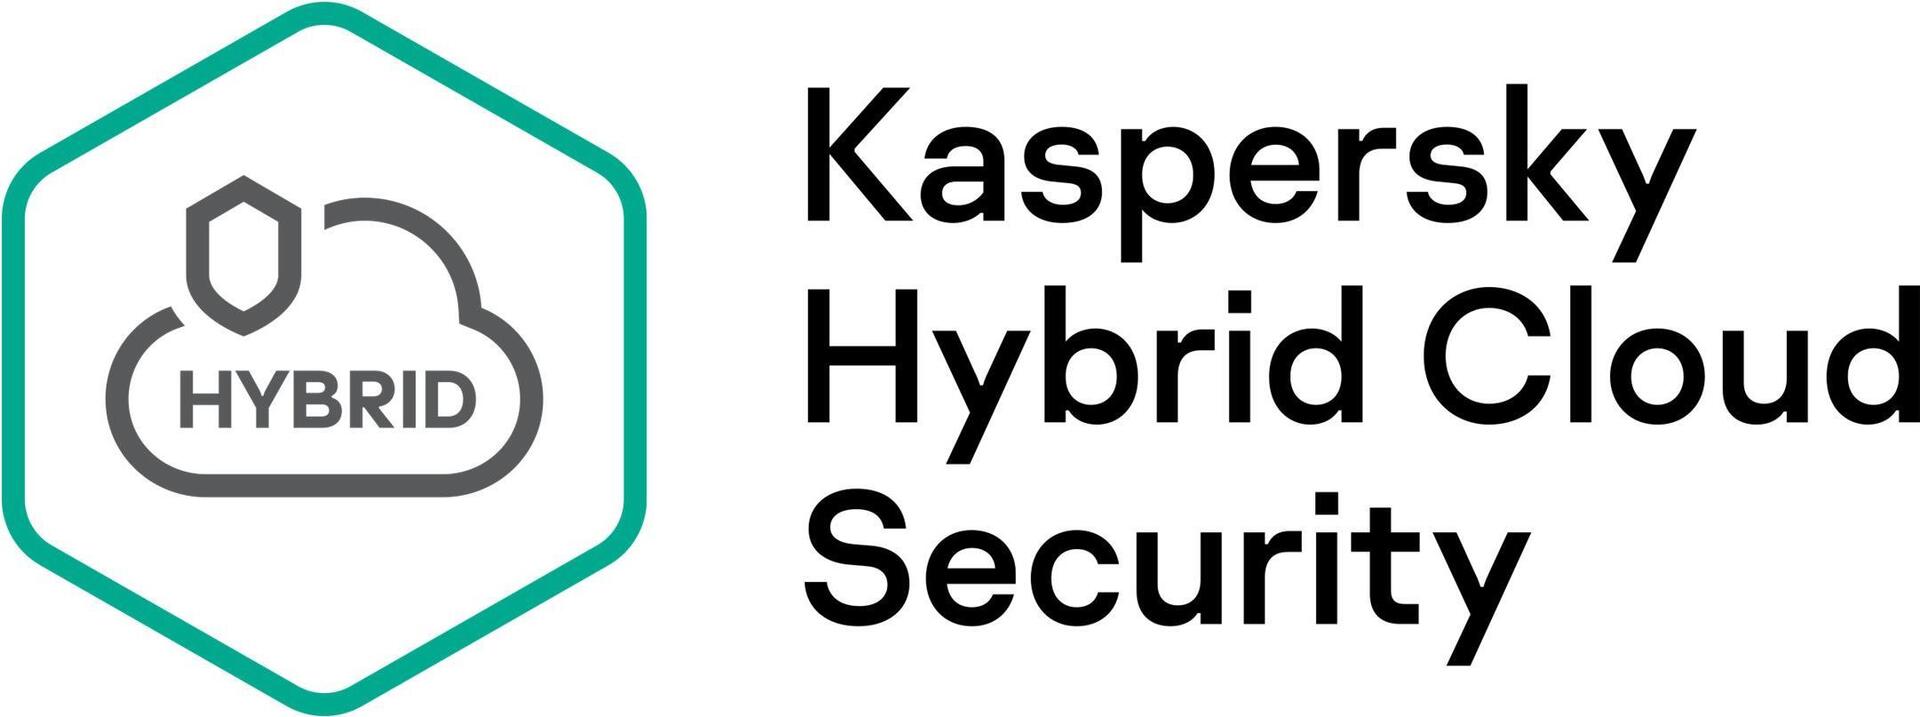 Kaspersky Hybrid Cloud Security Enterprise CPU European Edi. 5-9 CPU 2-Year Base License (KL4553XAEDS)